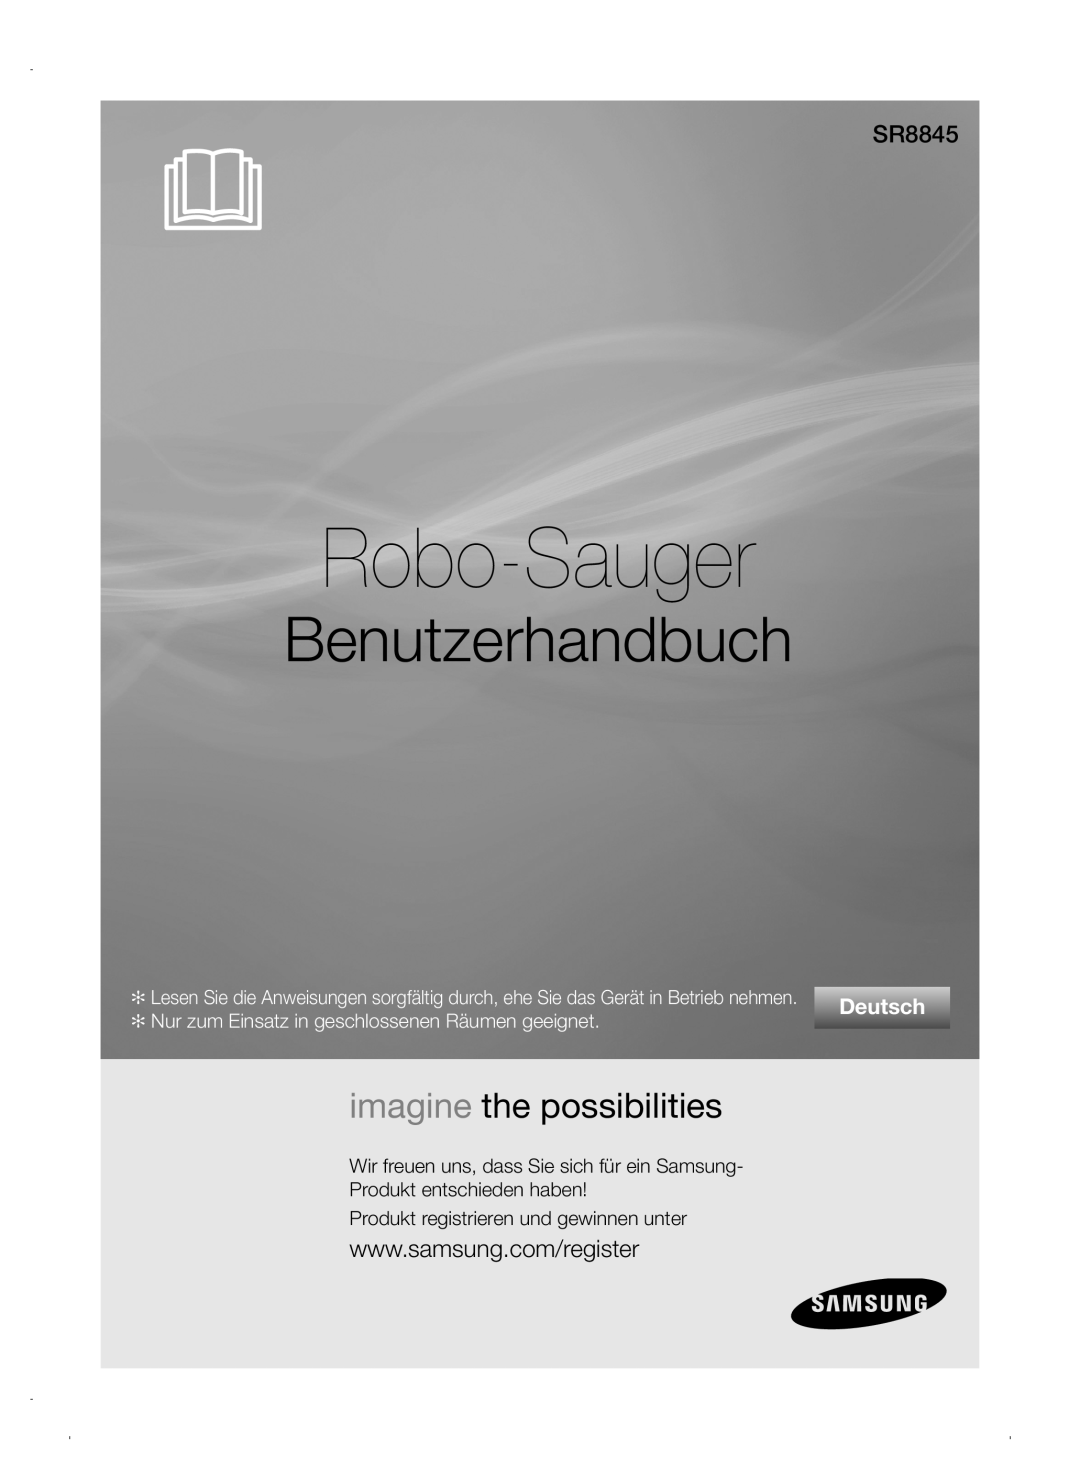 Samsung VCR8845T3A/XEO, VCR8845T3A/XET manual Robo-Sauger, Benutzerhandbuch, Deutsch, imagine the possibilities, SR8845 